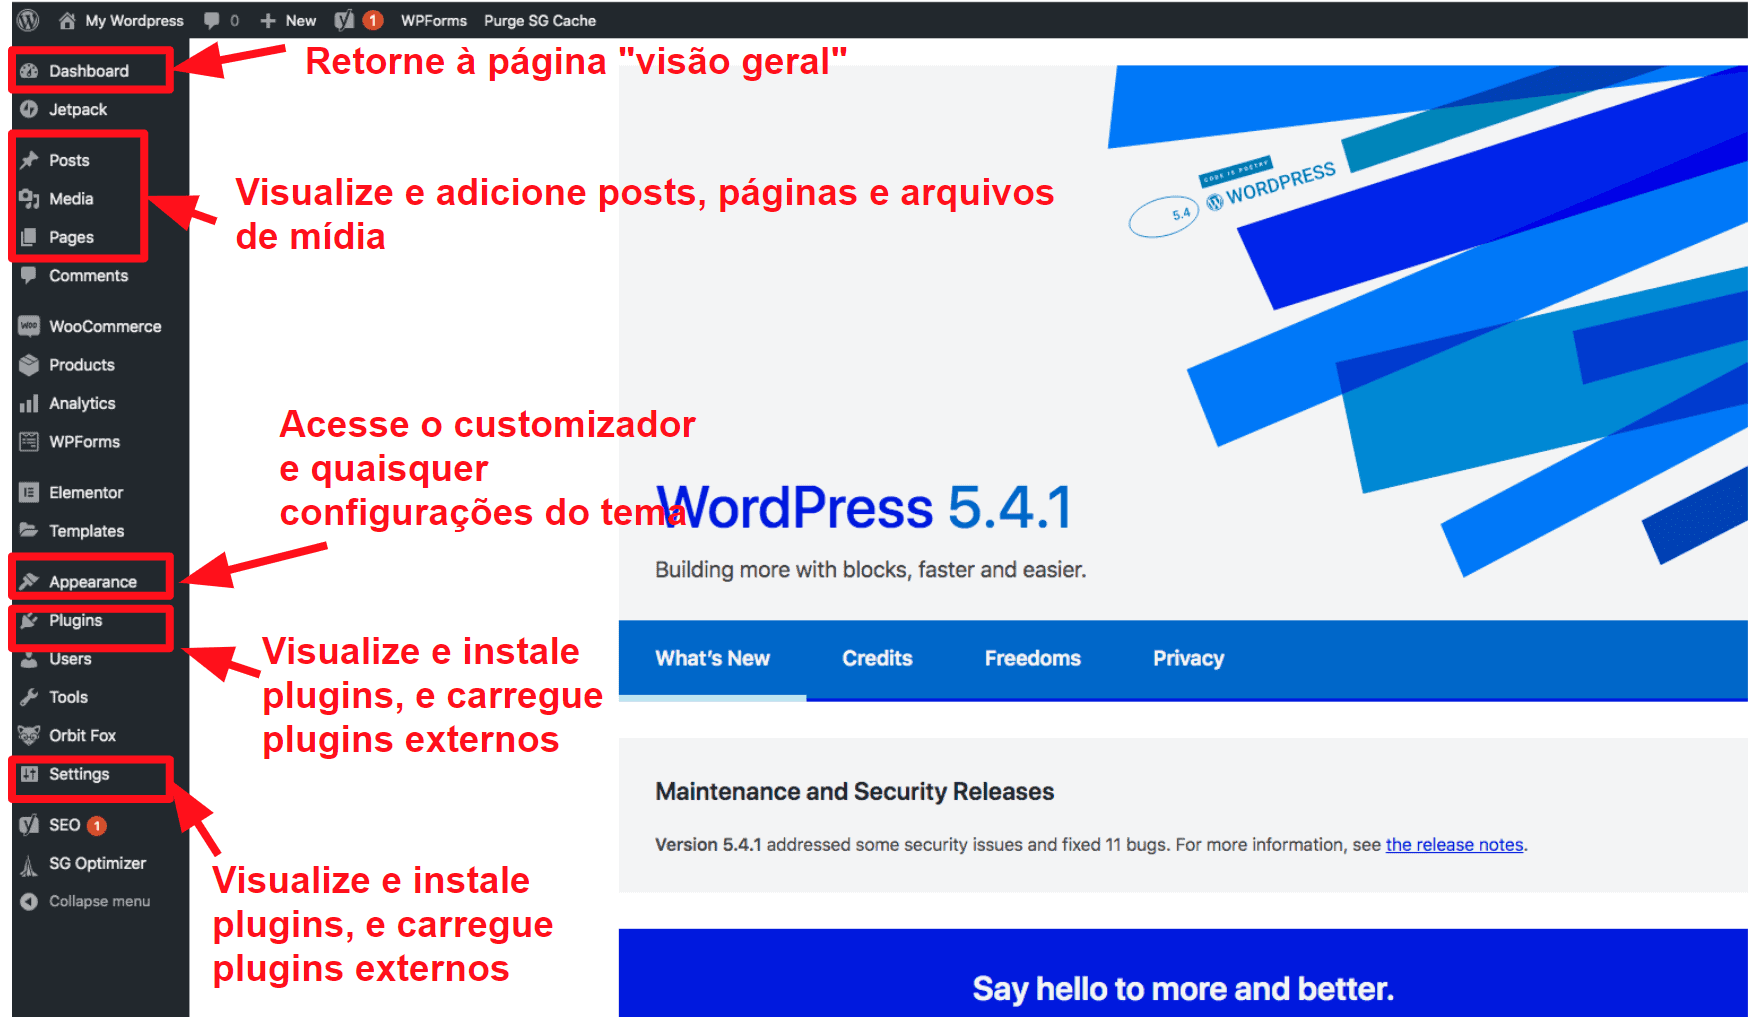 The WordPress dashboard PT16